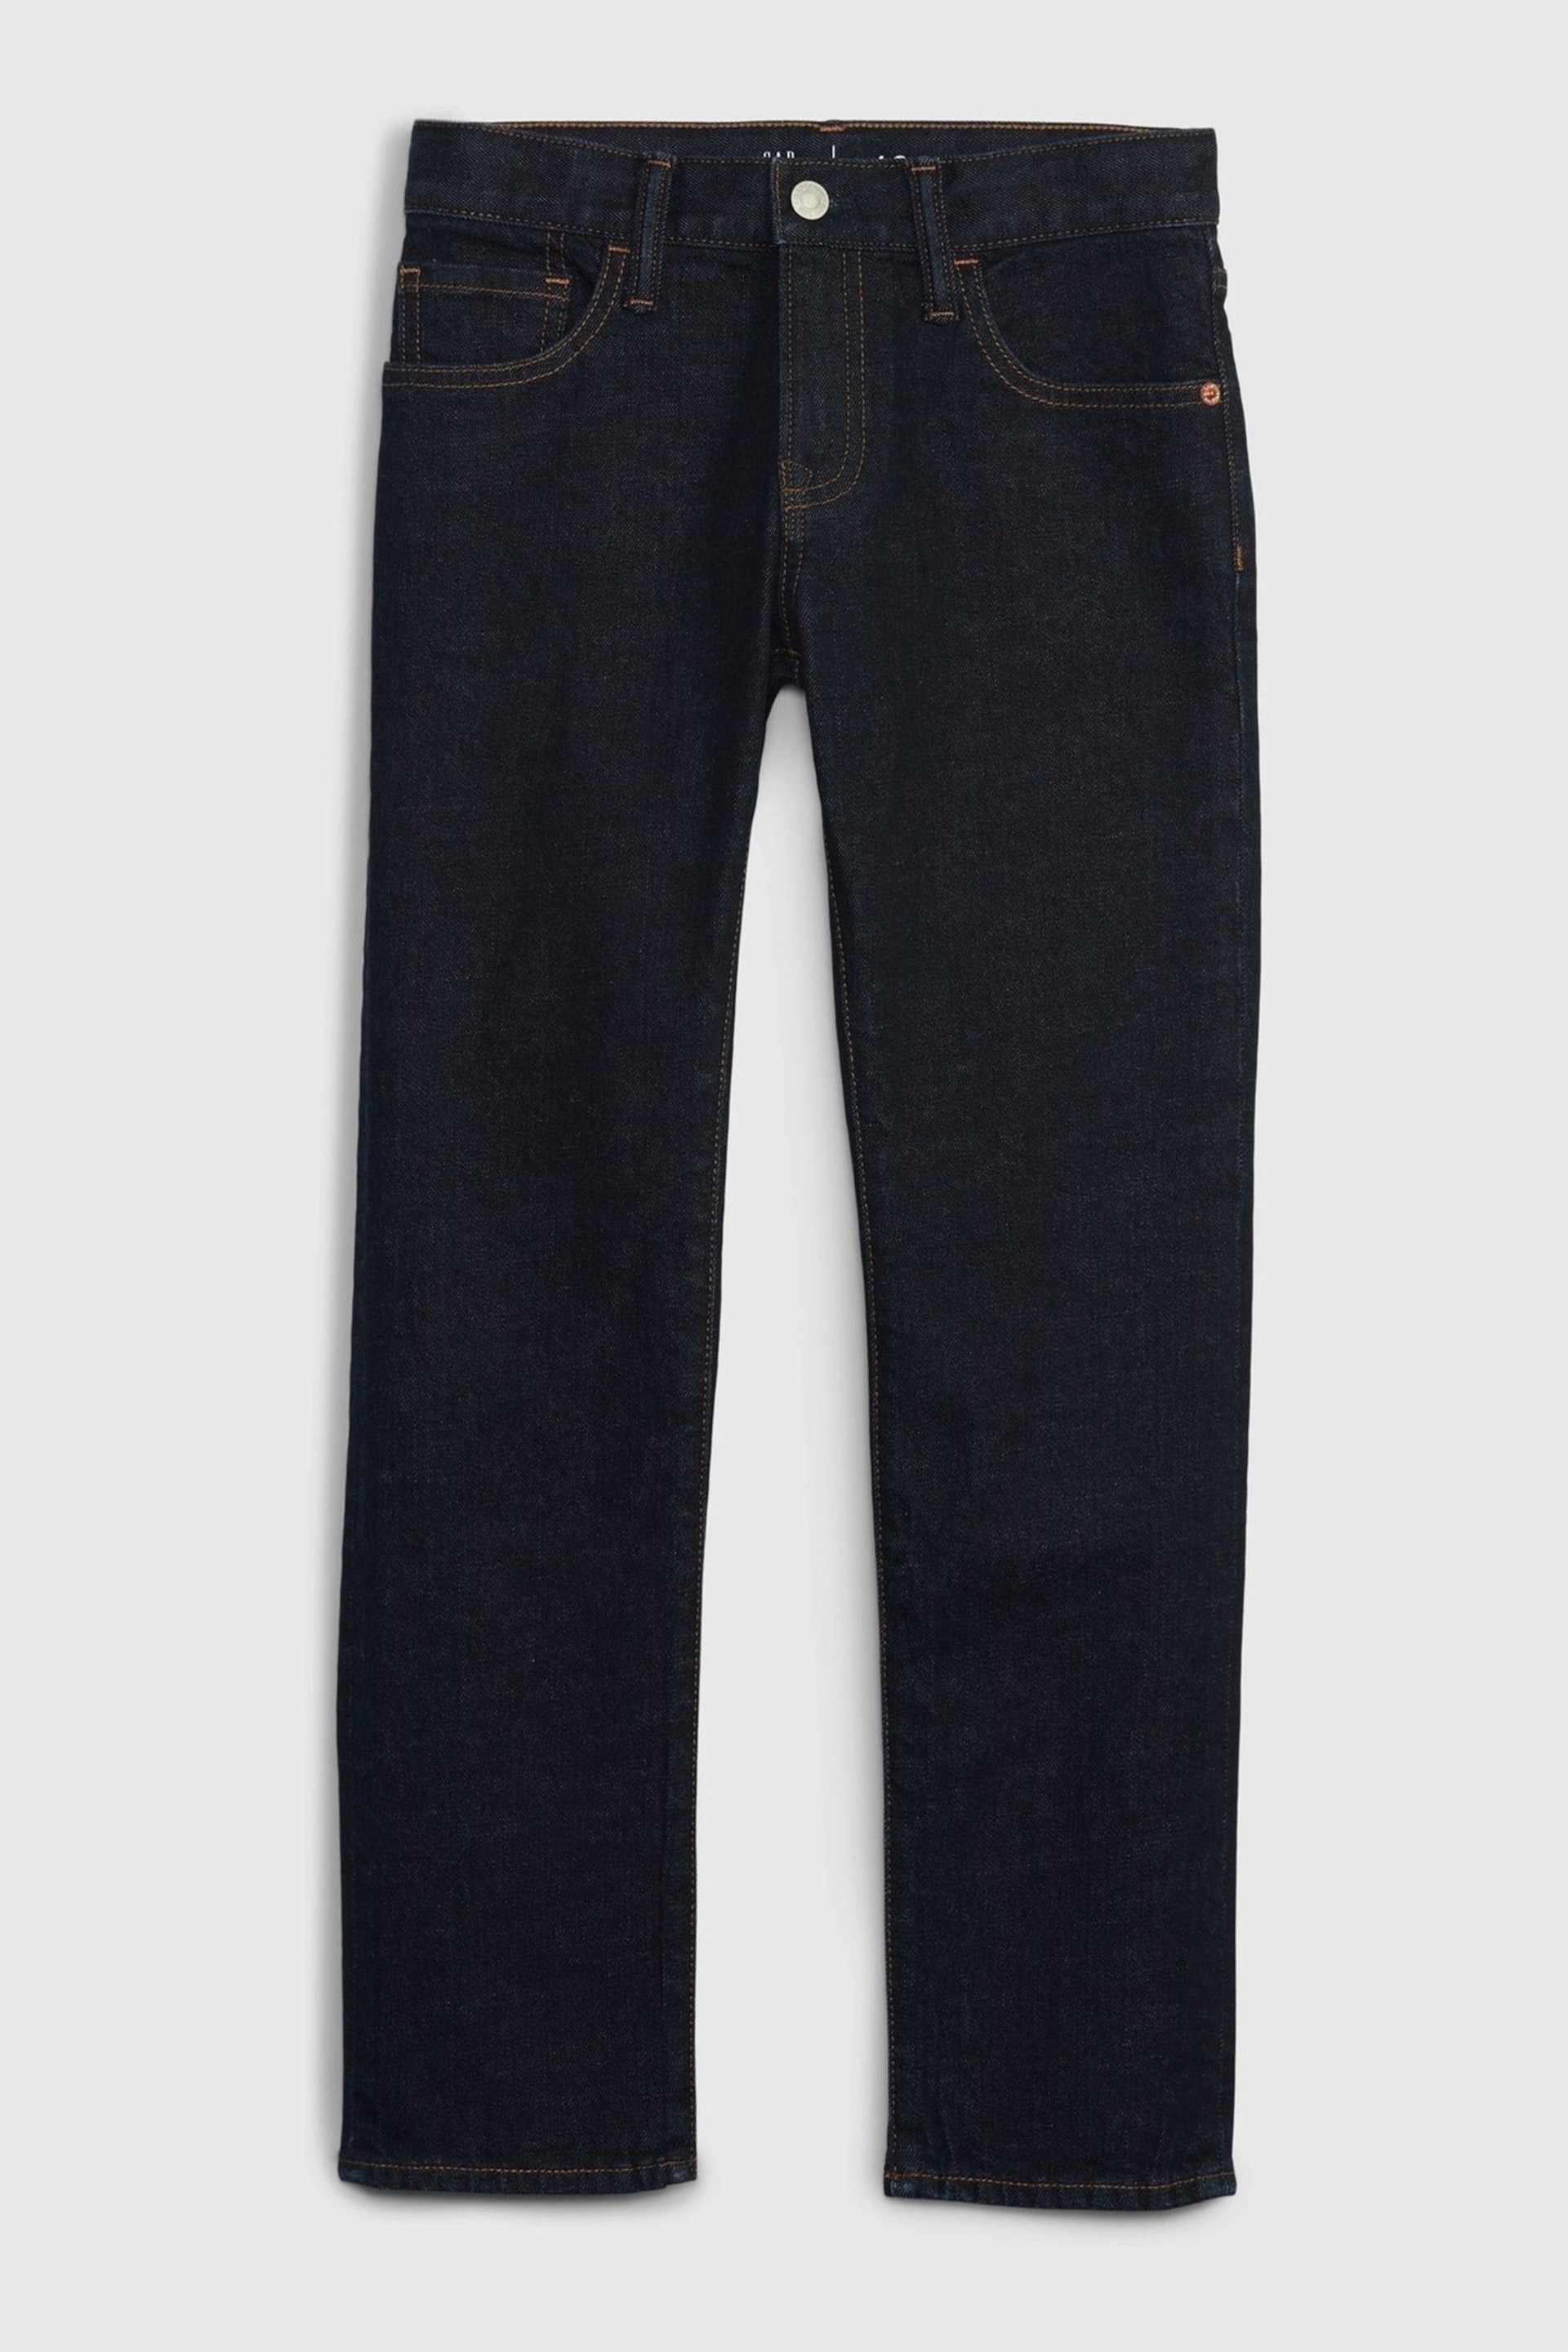 Gap Black Low Stretch Slim Jeans (5-13yrs) - Image 3 of 6